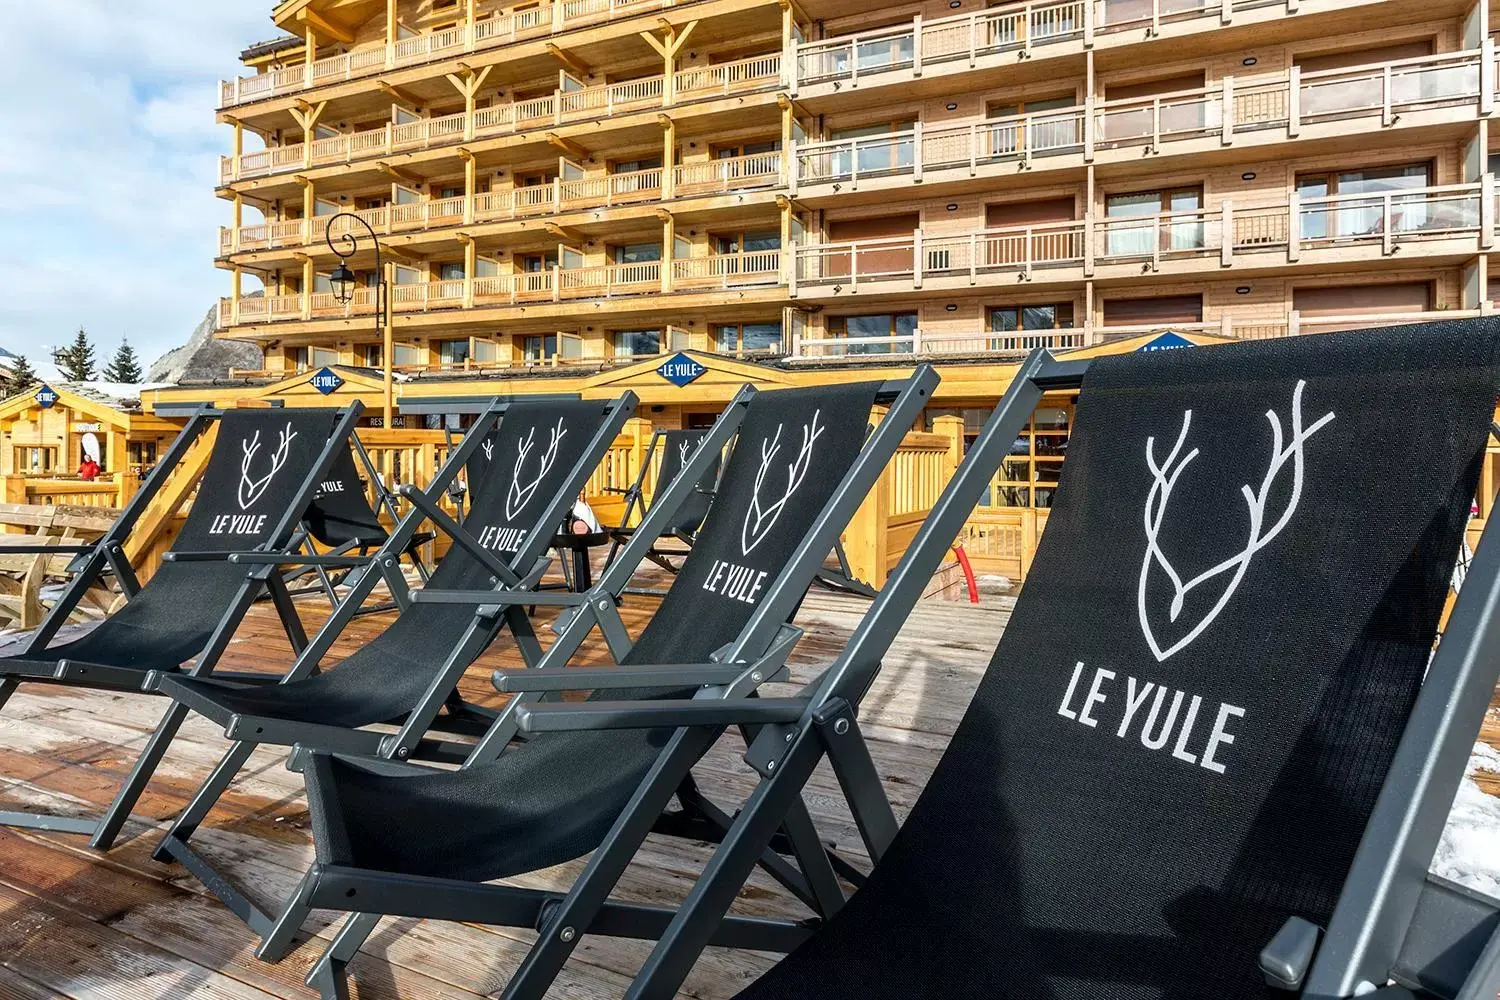 Balcony/Terrace, Patio/Outdoor Area in Le Yule Hotel & Spa